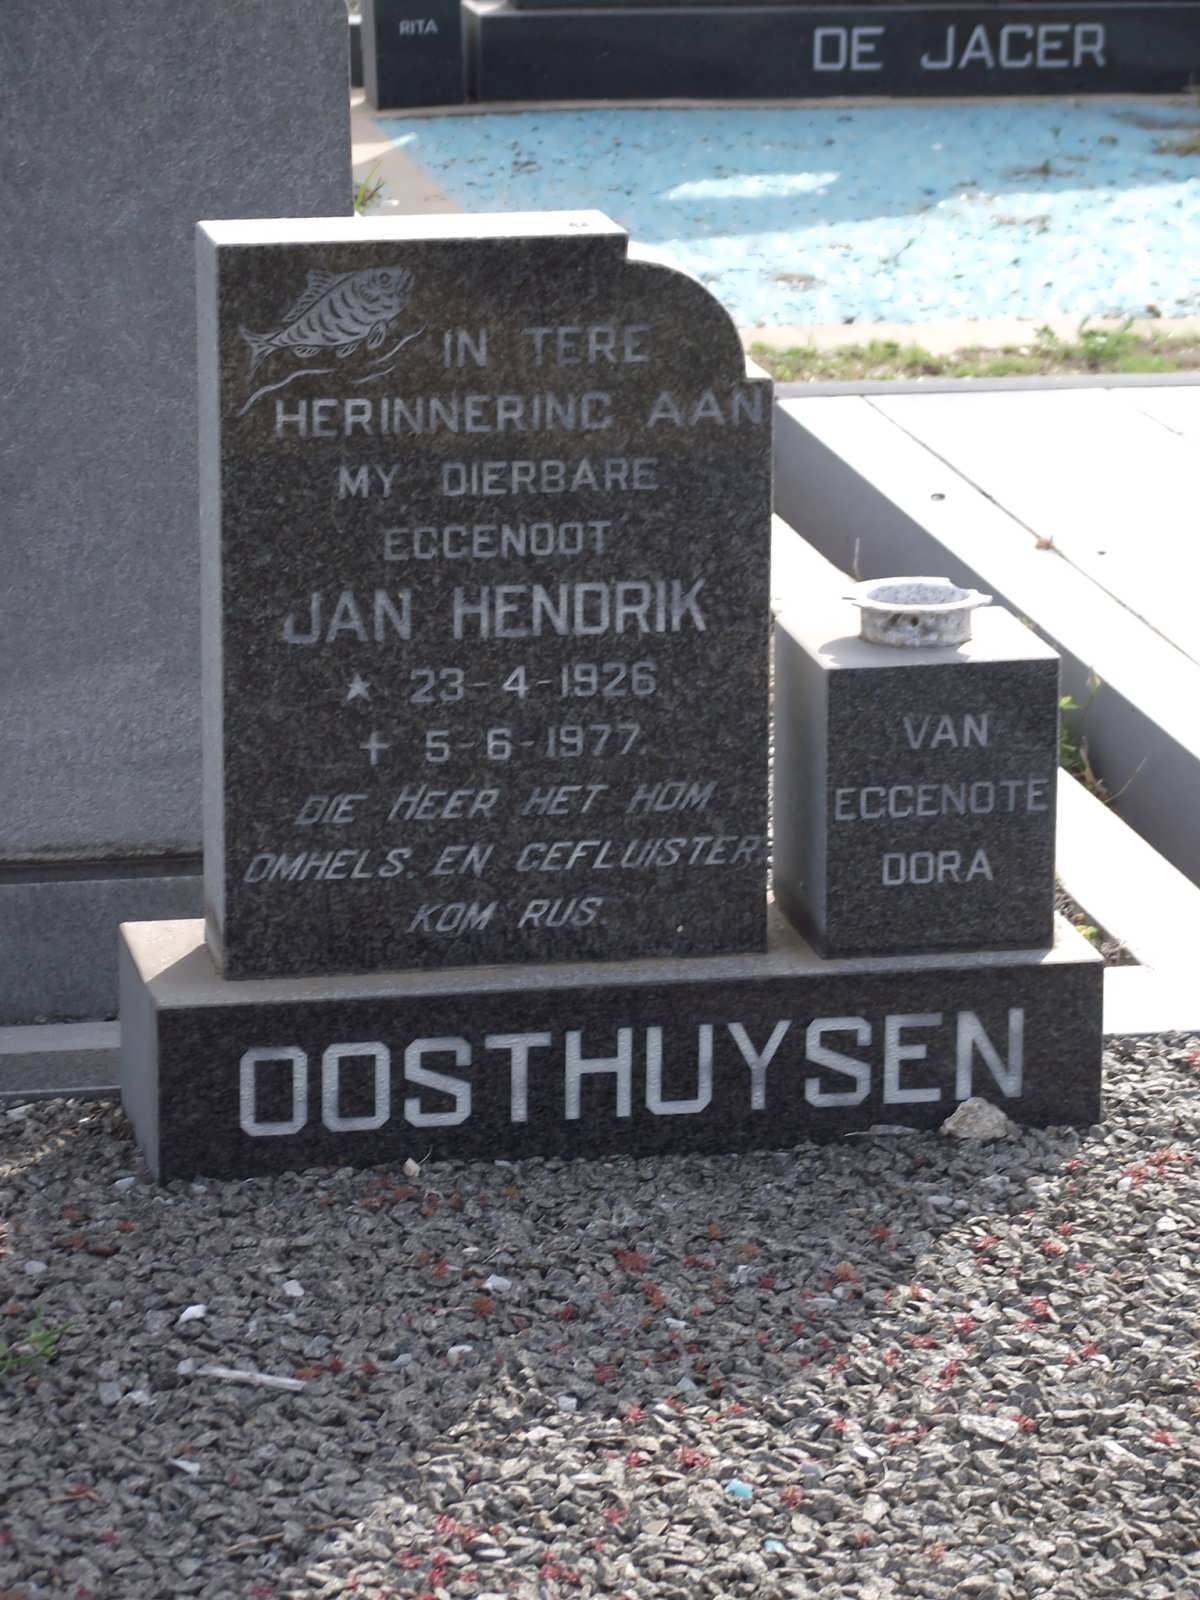 OOSTHUYSEN Jan Hendrik 1926-1977